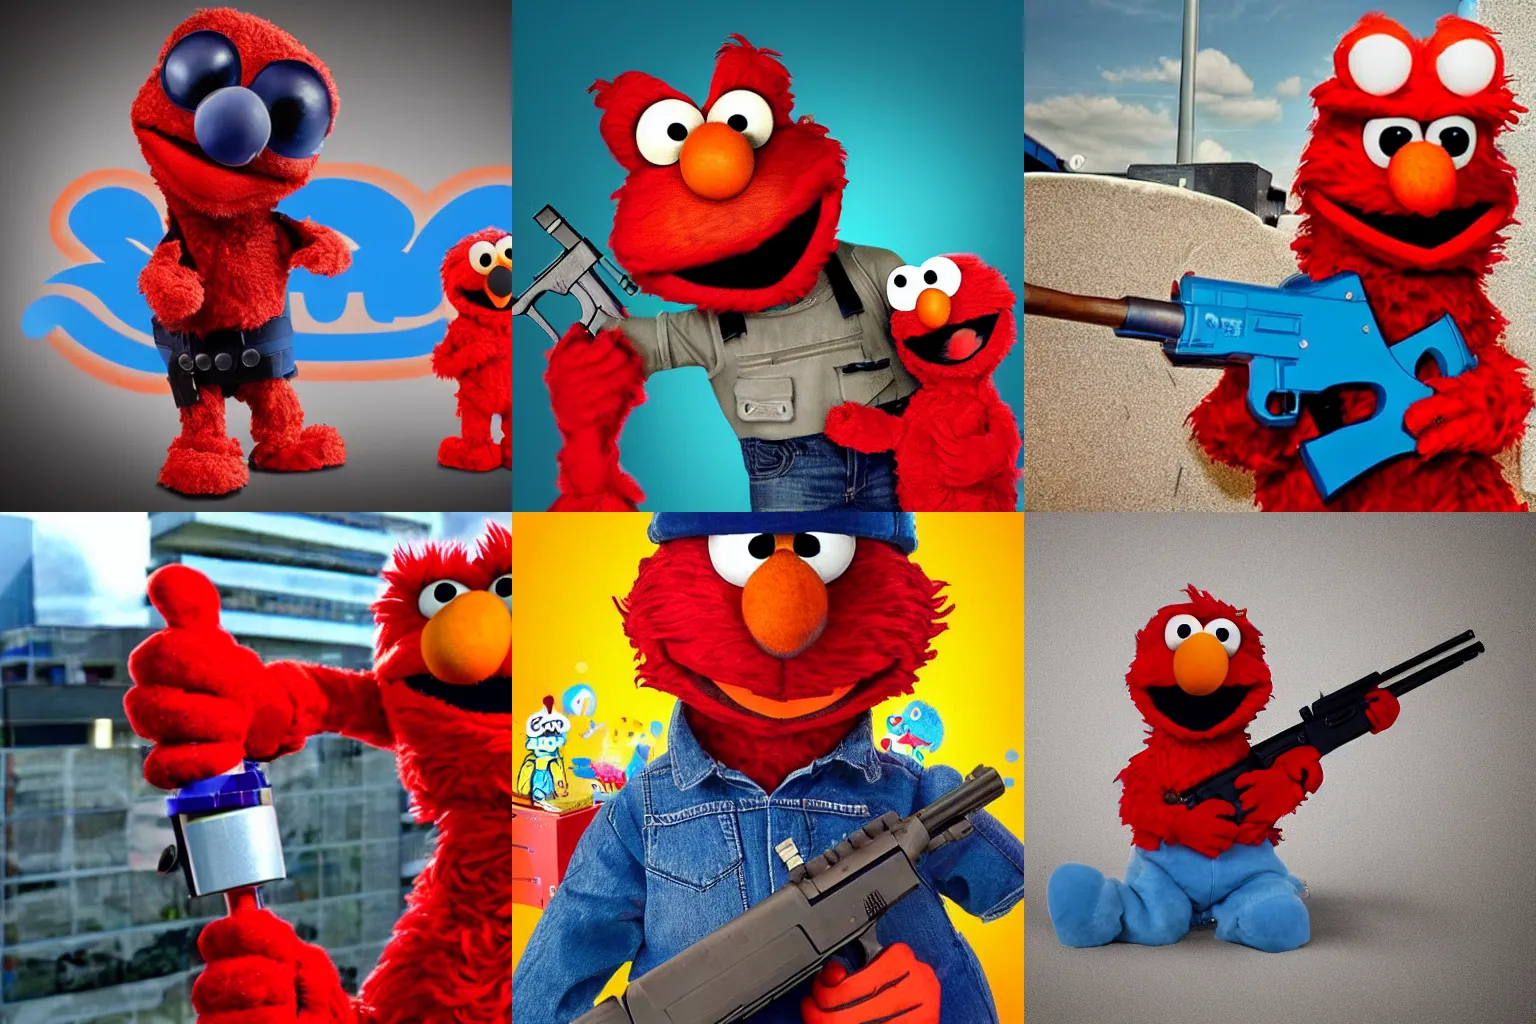 Prompt: Elmo holding an AK47